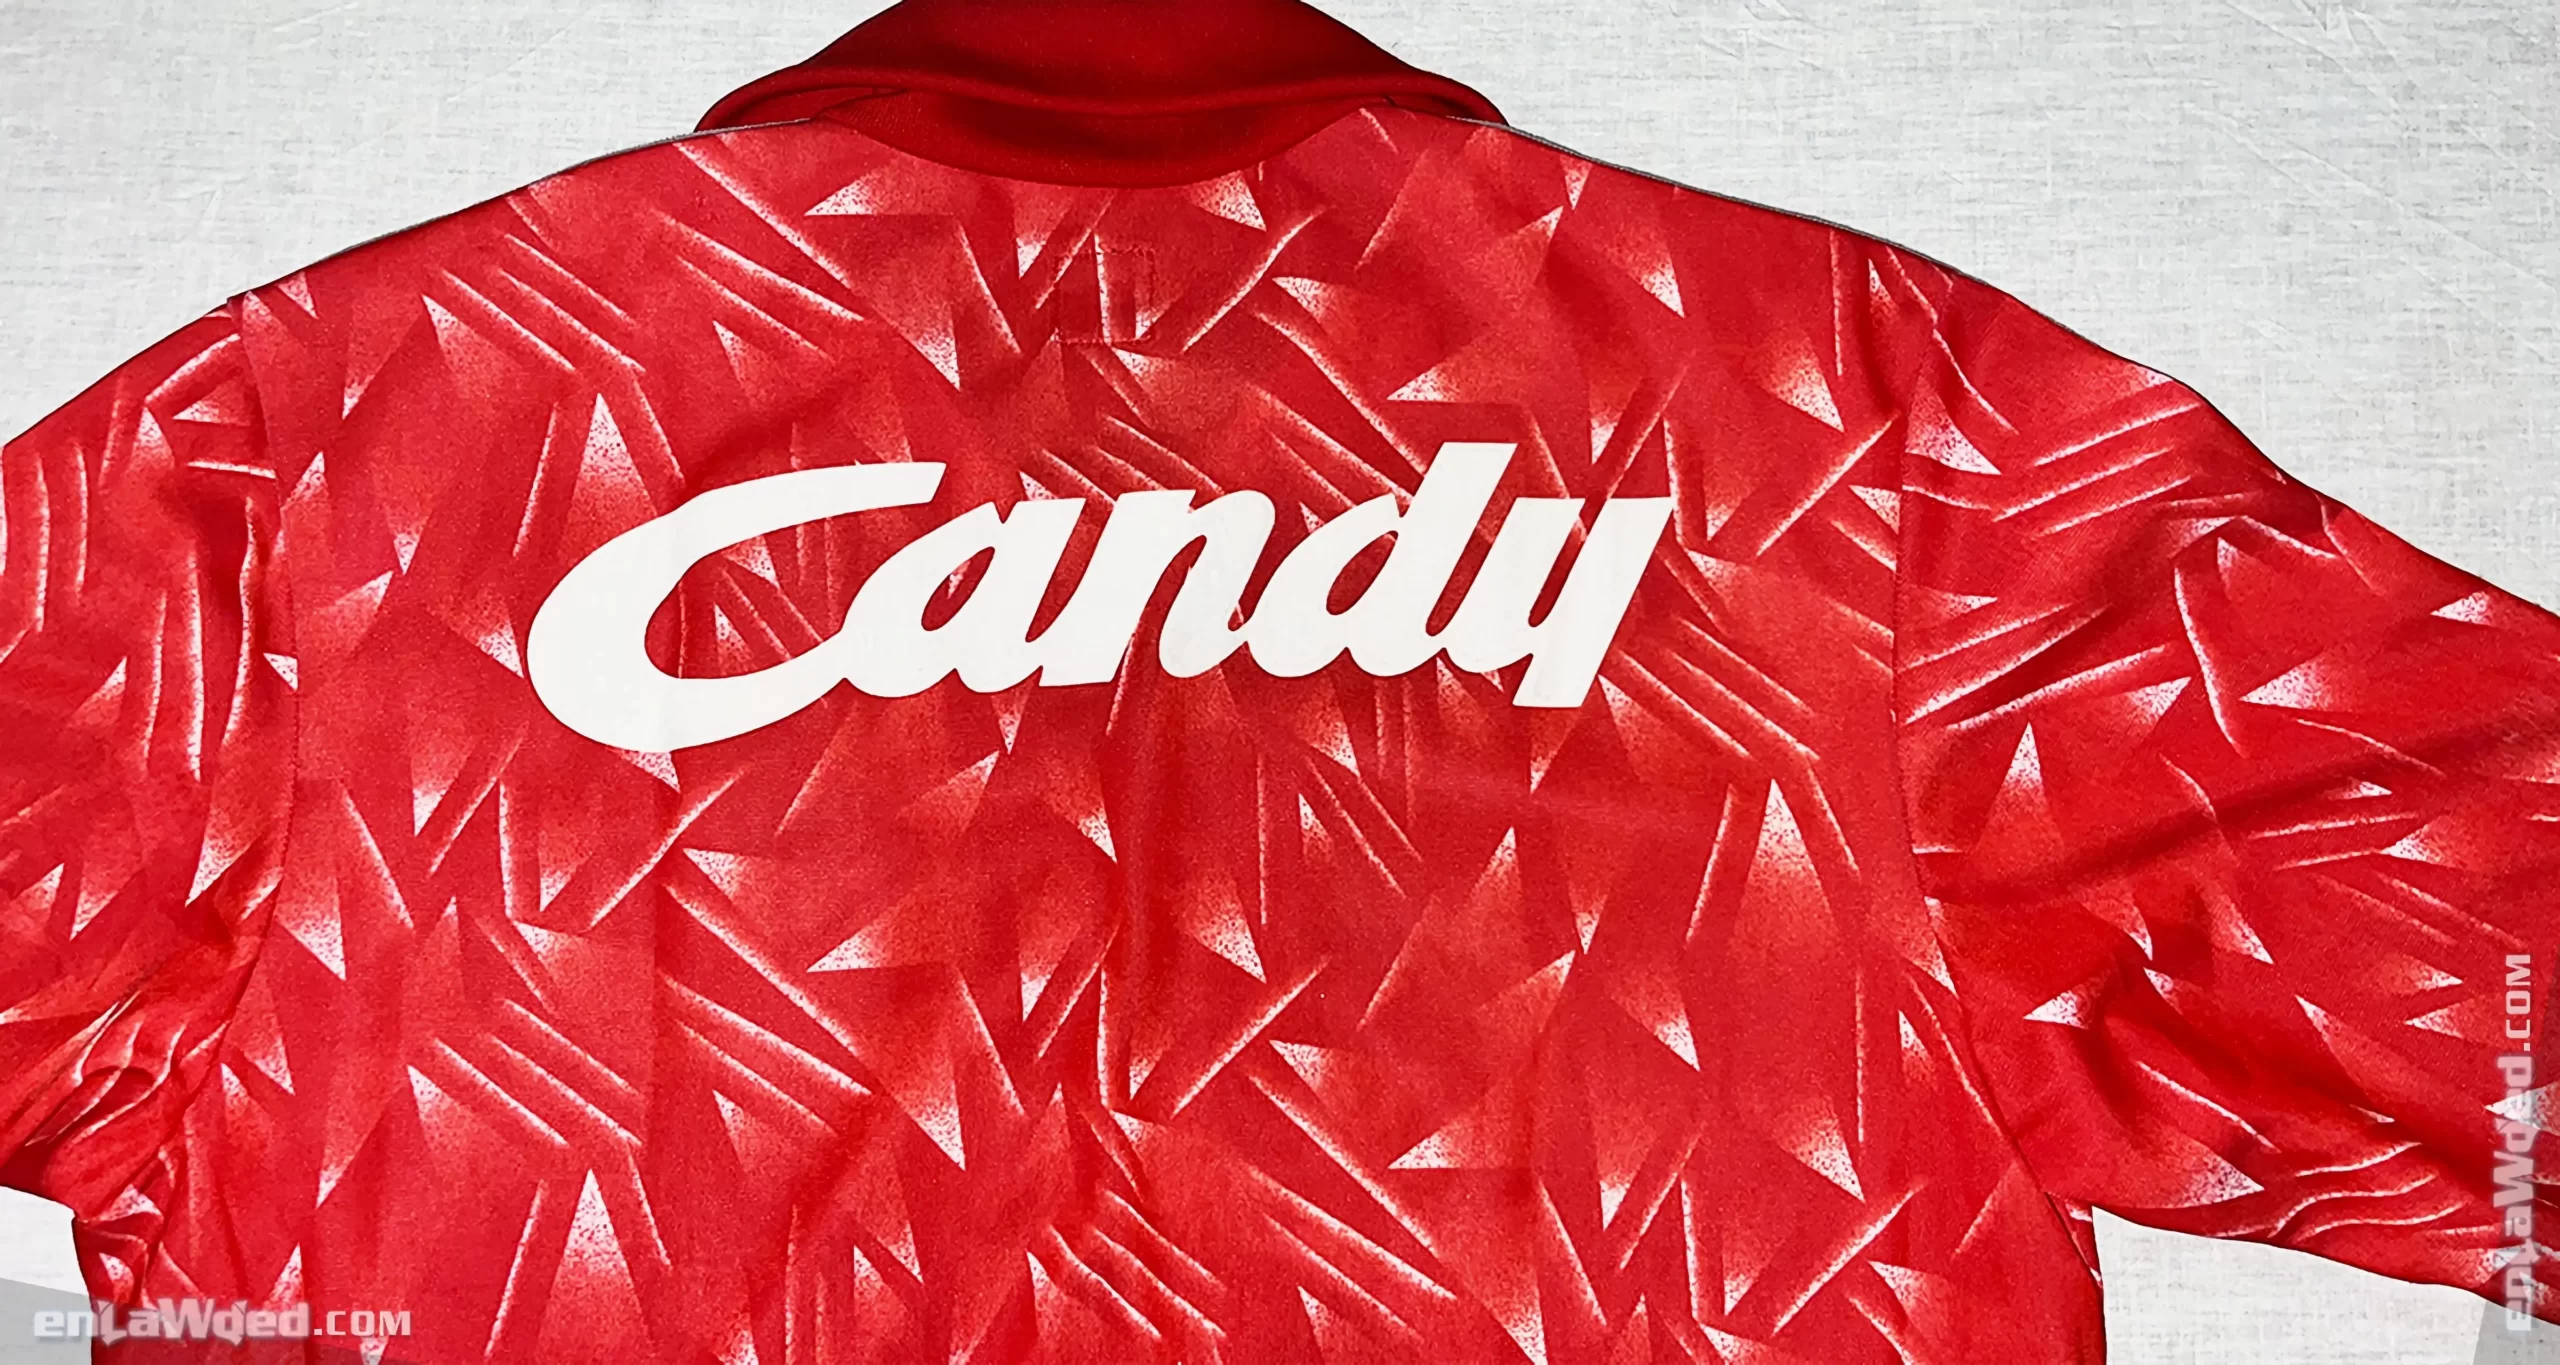 Men’s 2006 Adidas Liverpool 1989-91 Candy Home TT: Sturdy (EnLawded.com file #lp1l9clb126343dxwz0rlwdjk)